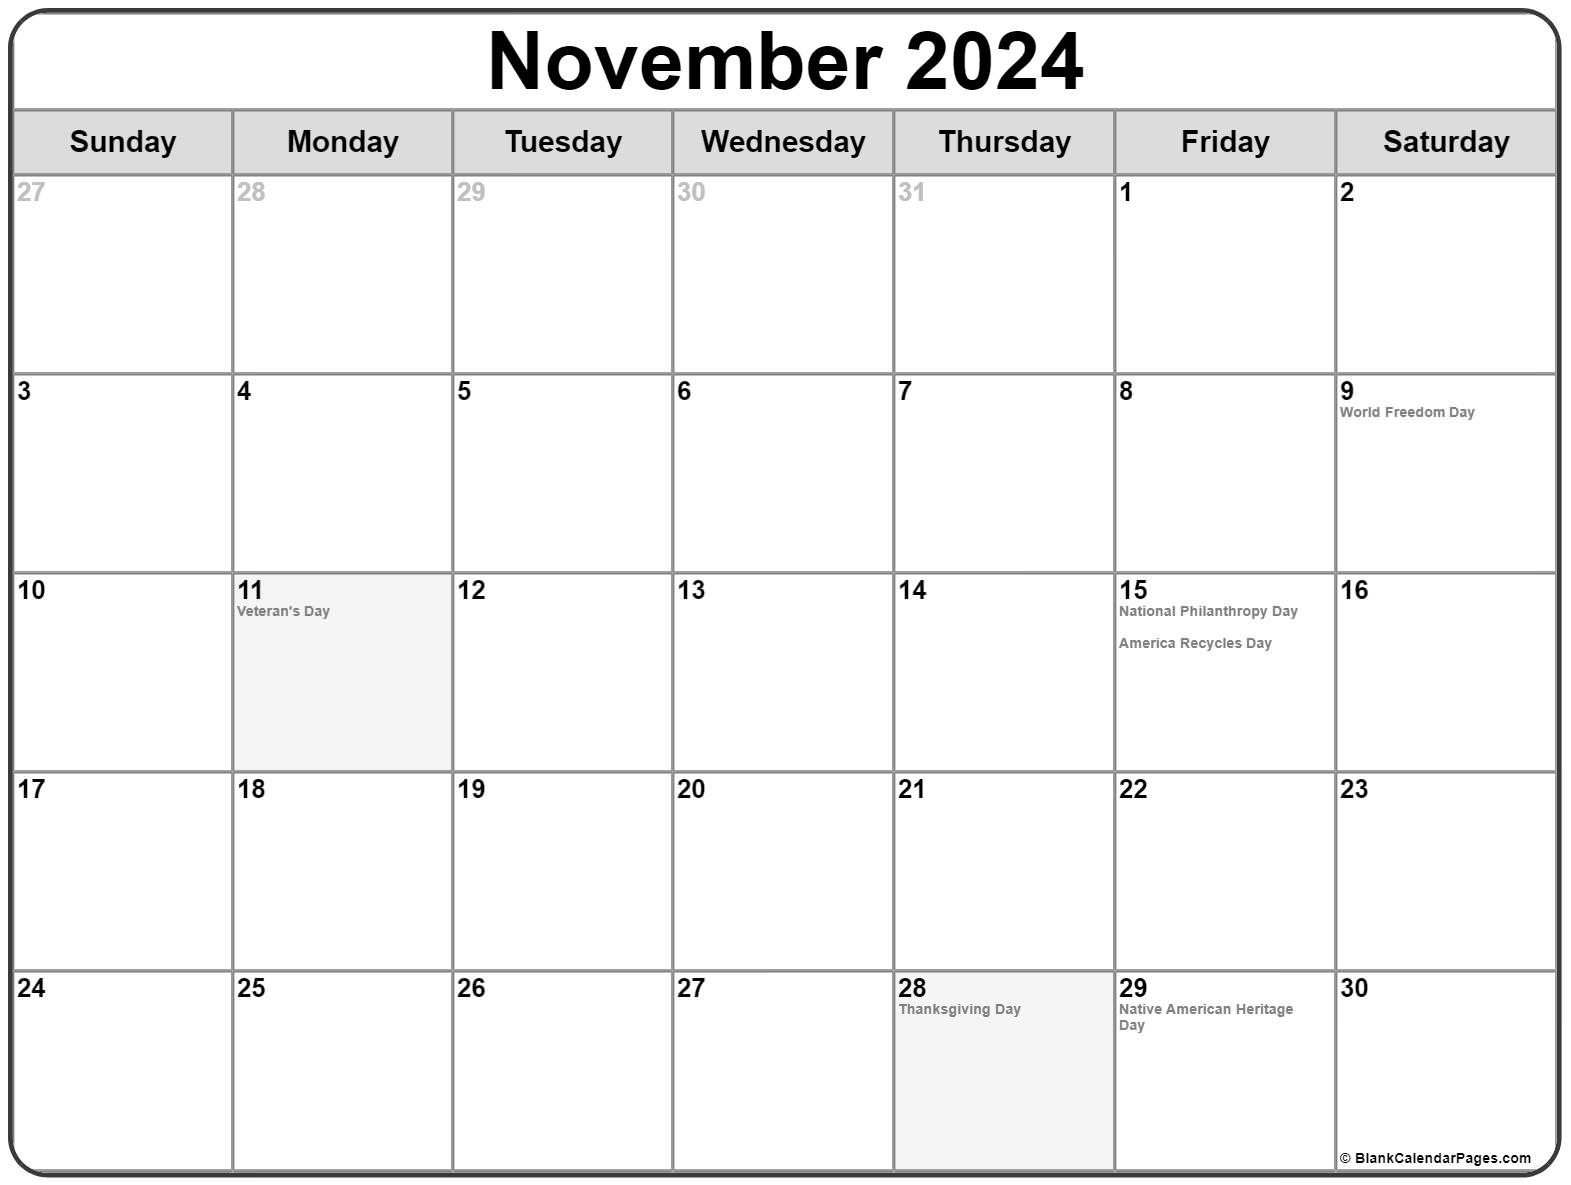 November 2018 Calendar With Holidays List